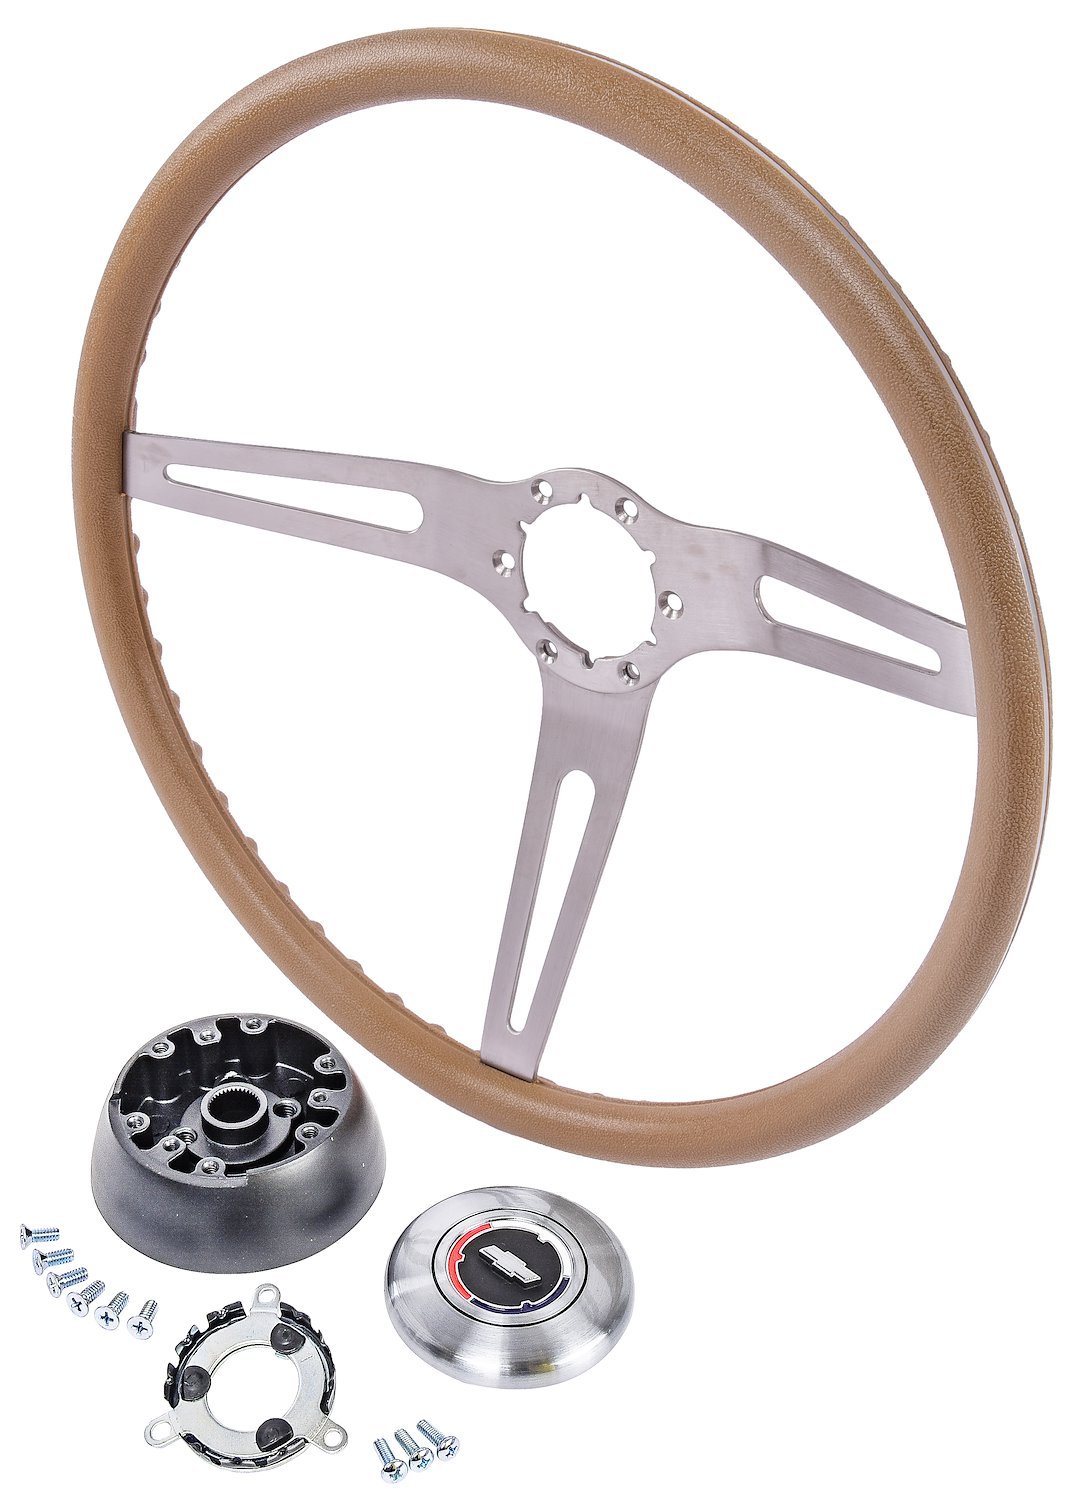 3-Spoke Comfort Grip Steering Wheel Kit Fits Select 1969-1972 Chevrolet Cars [Saddle Grip]